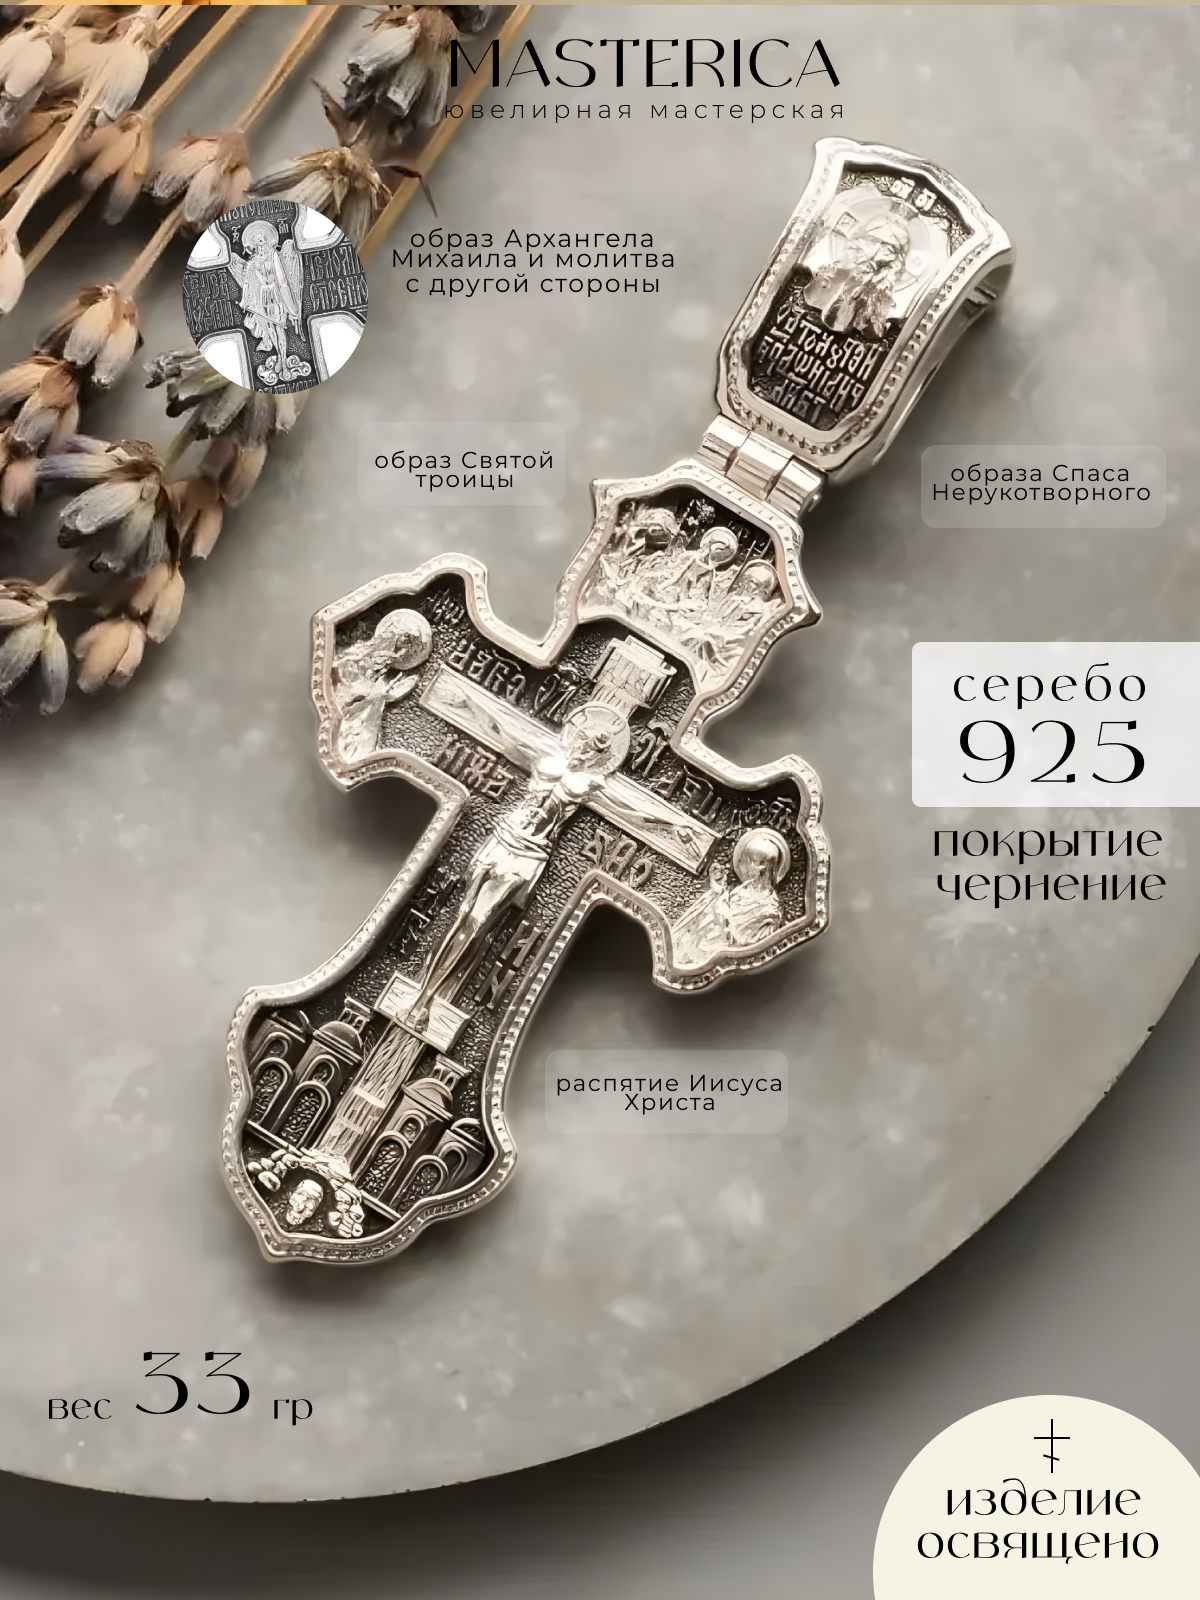 Славянский оберег, крестик Елизавета, серебро, 925 проба, чернение